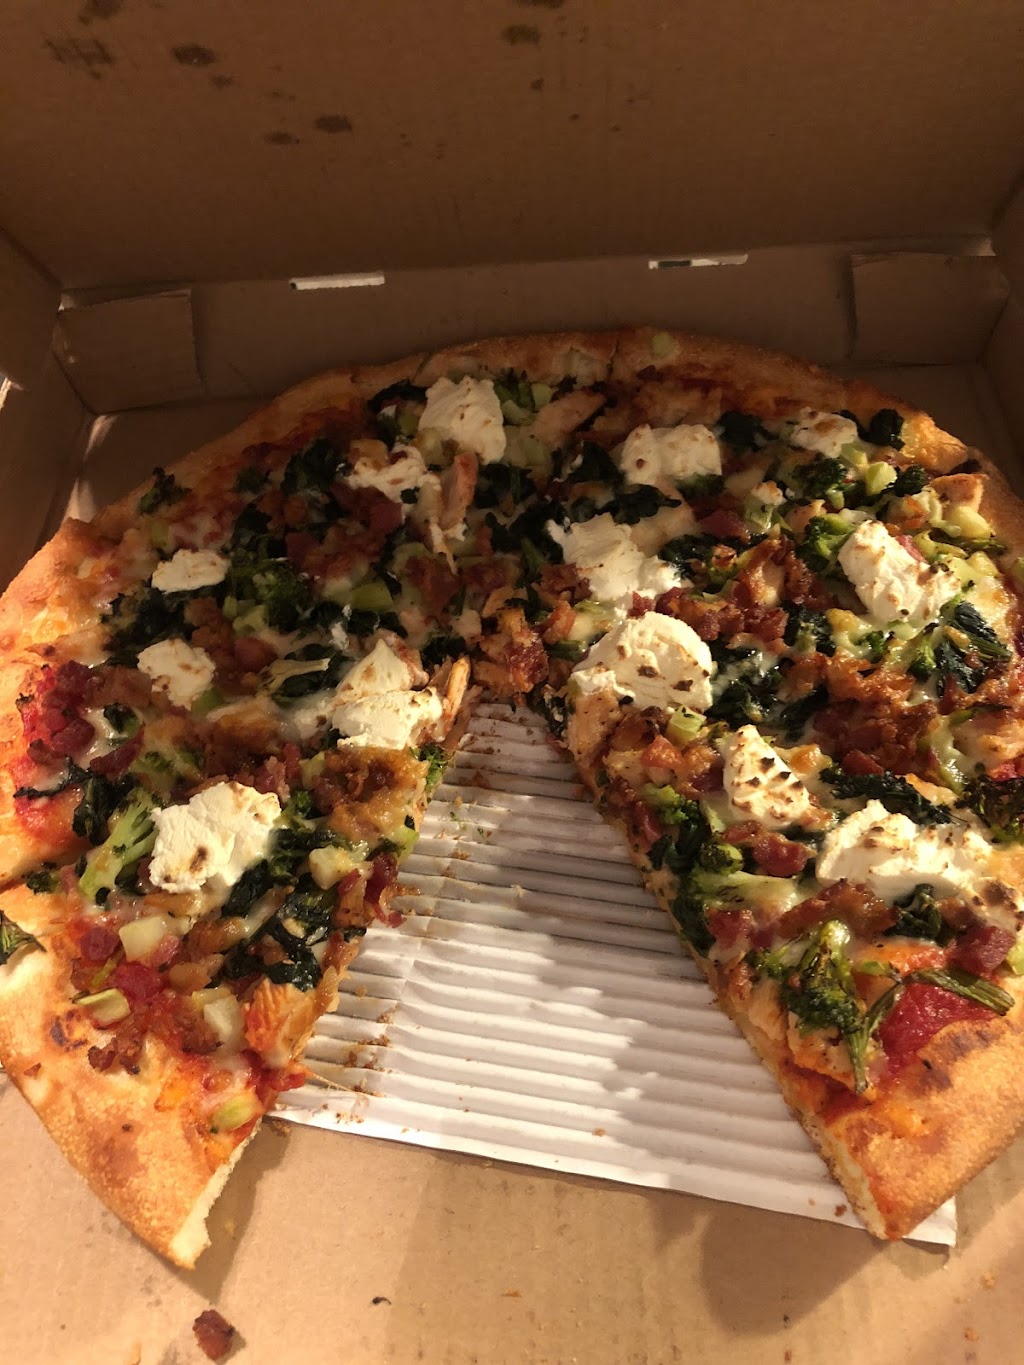 genoa pizza & grill | 1058 W Ashland Ave, Glenolden, PA 19036 | Phone: (610) 532-9999